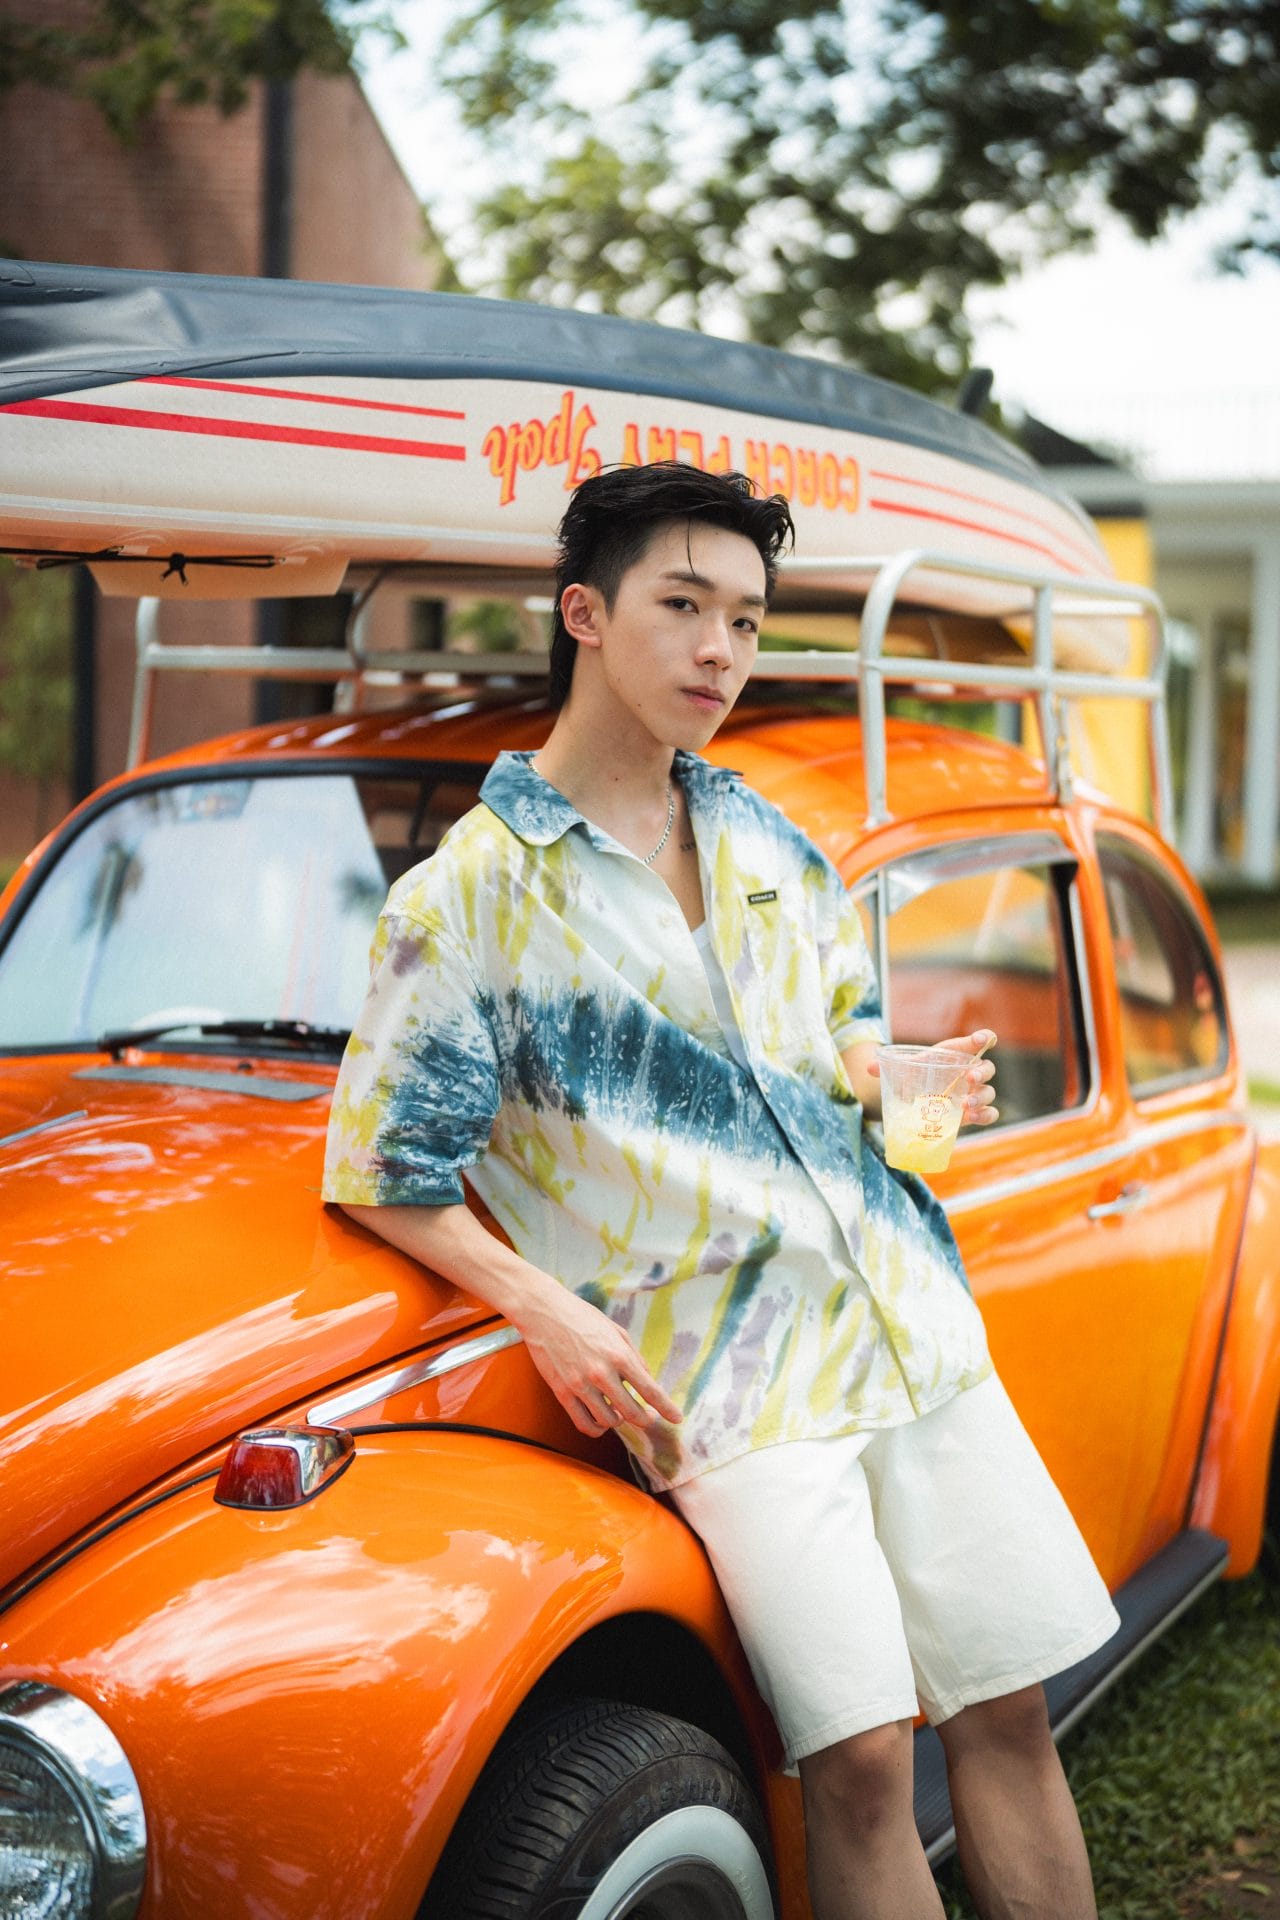 joe shiang posing with the vintage car